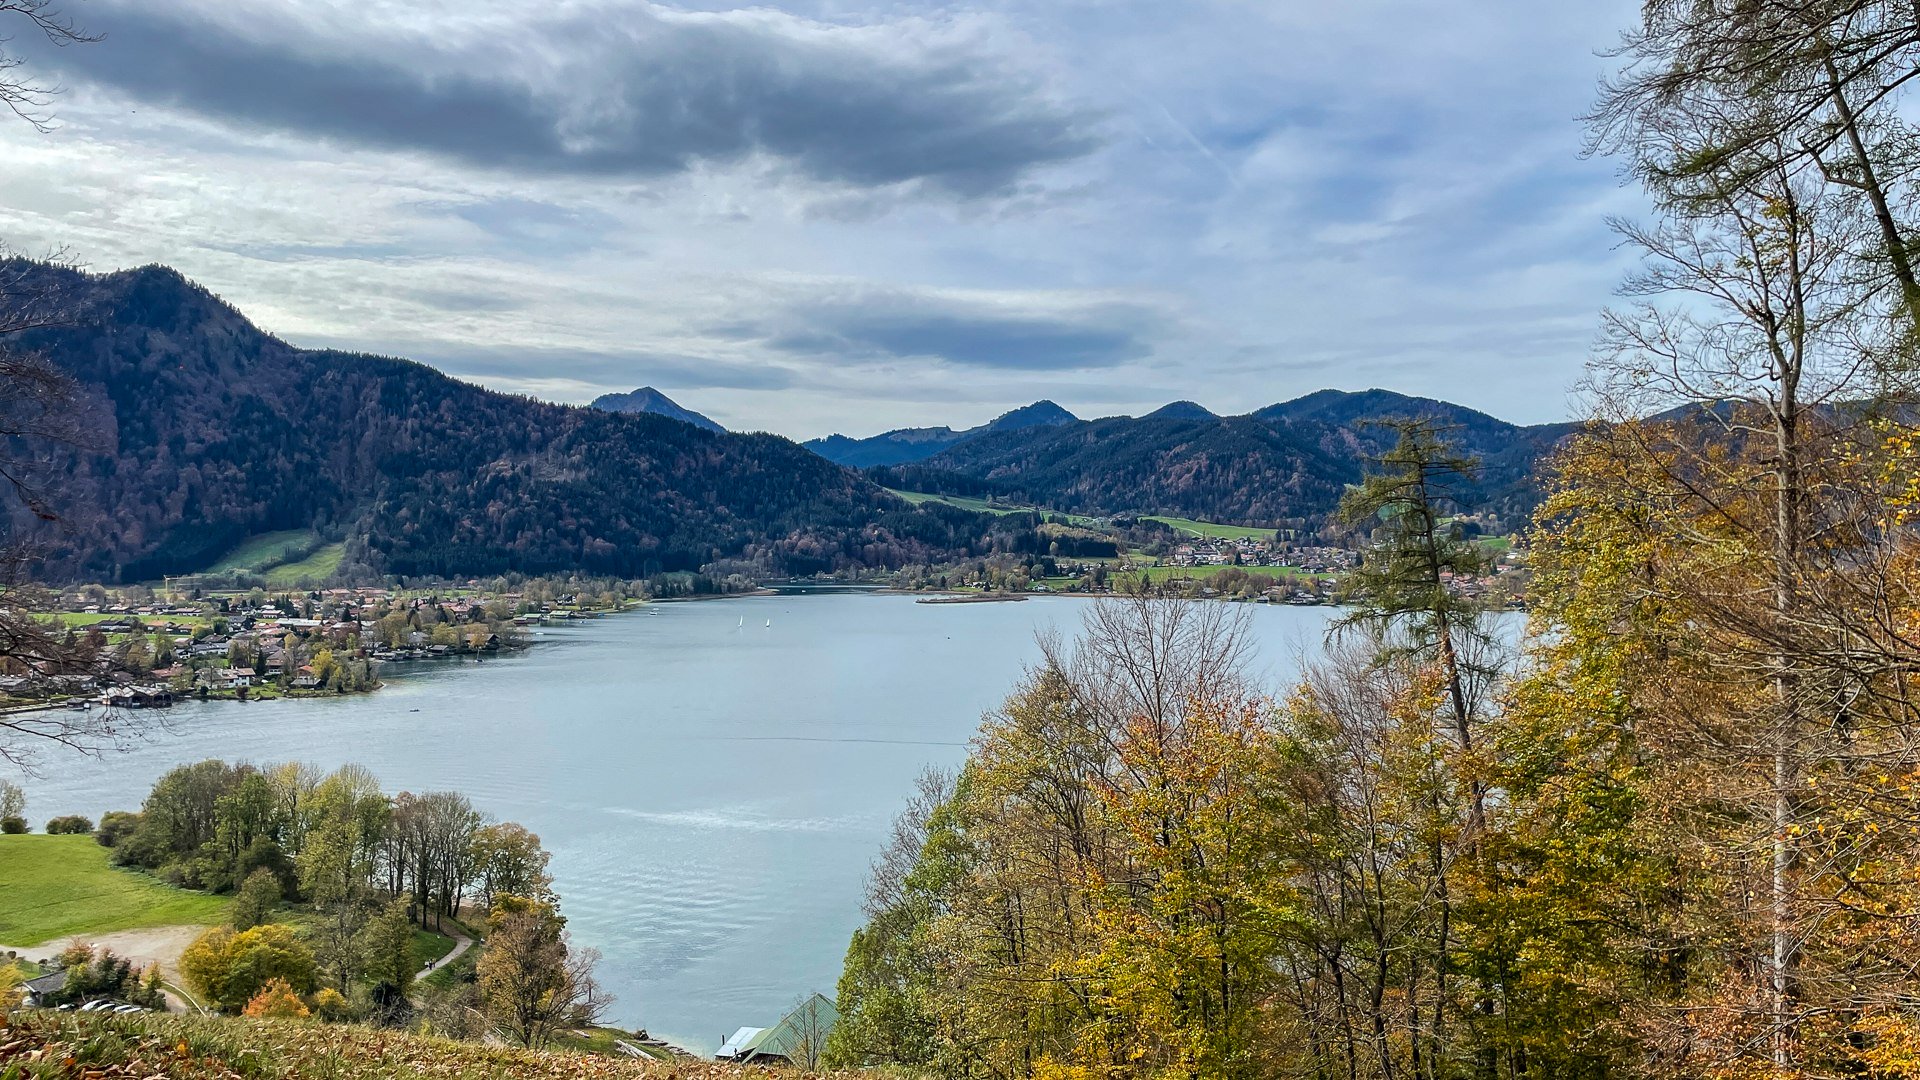 Panoramawanderung Tegernsee, Sabine Ziegler-Musiol, © DER TEGERNSEE, Sabine Ziegler-Musiol